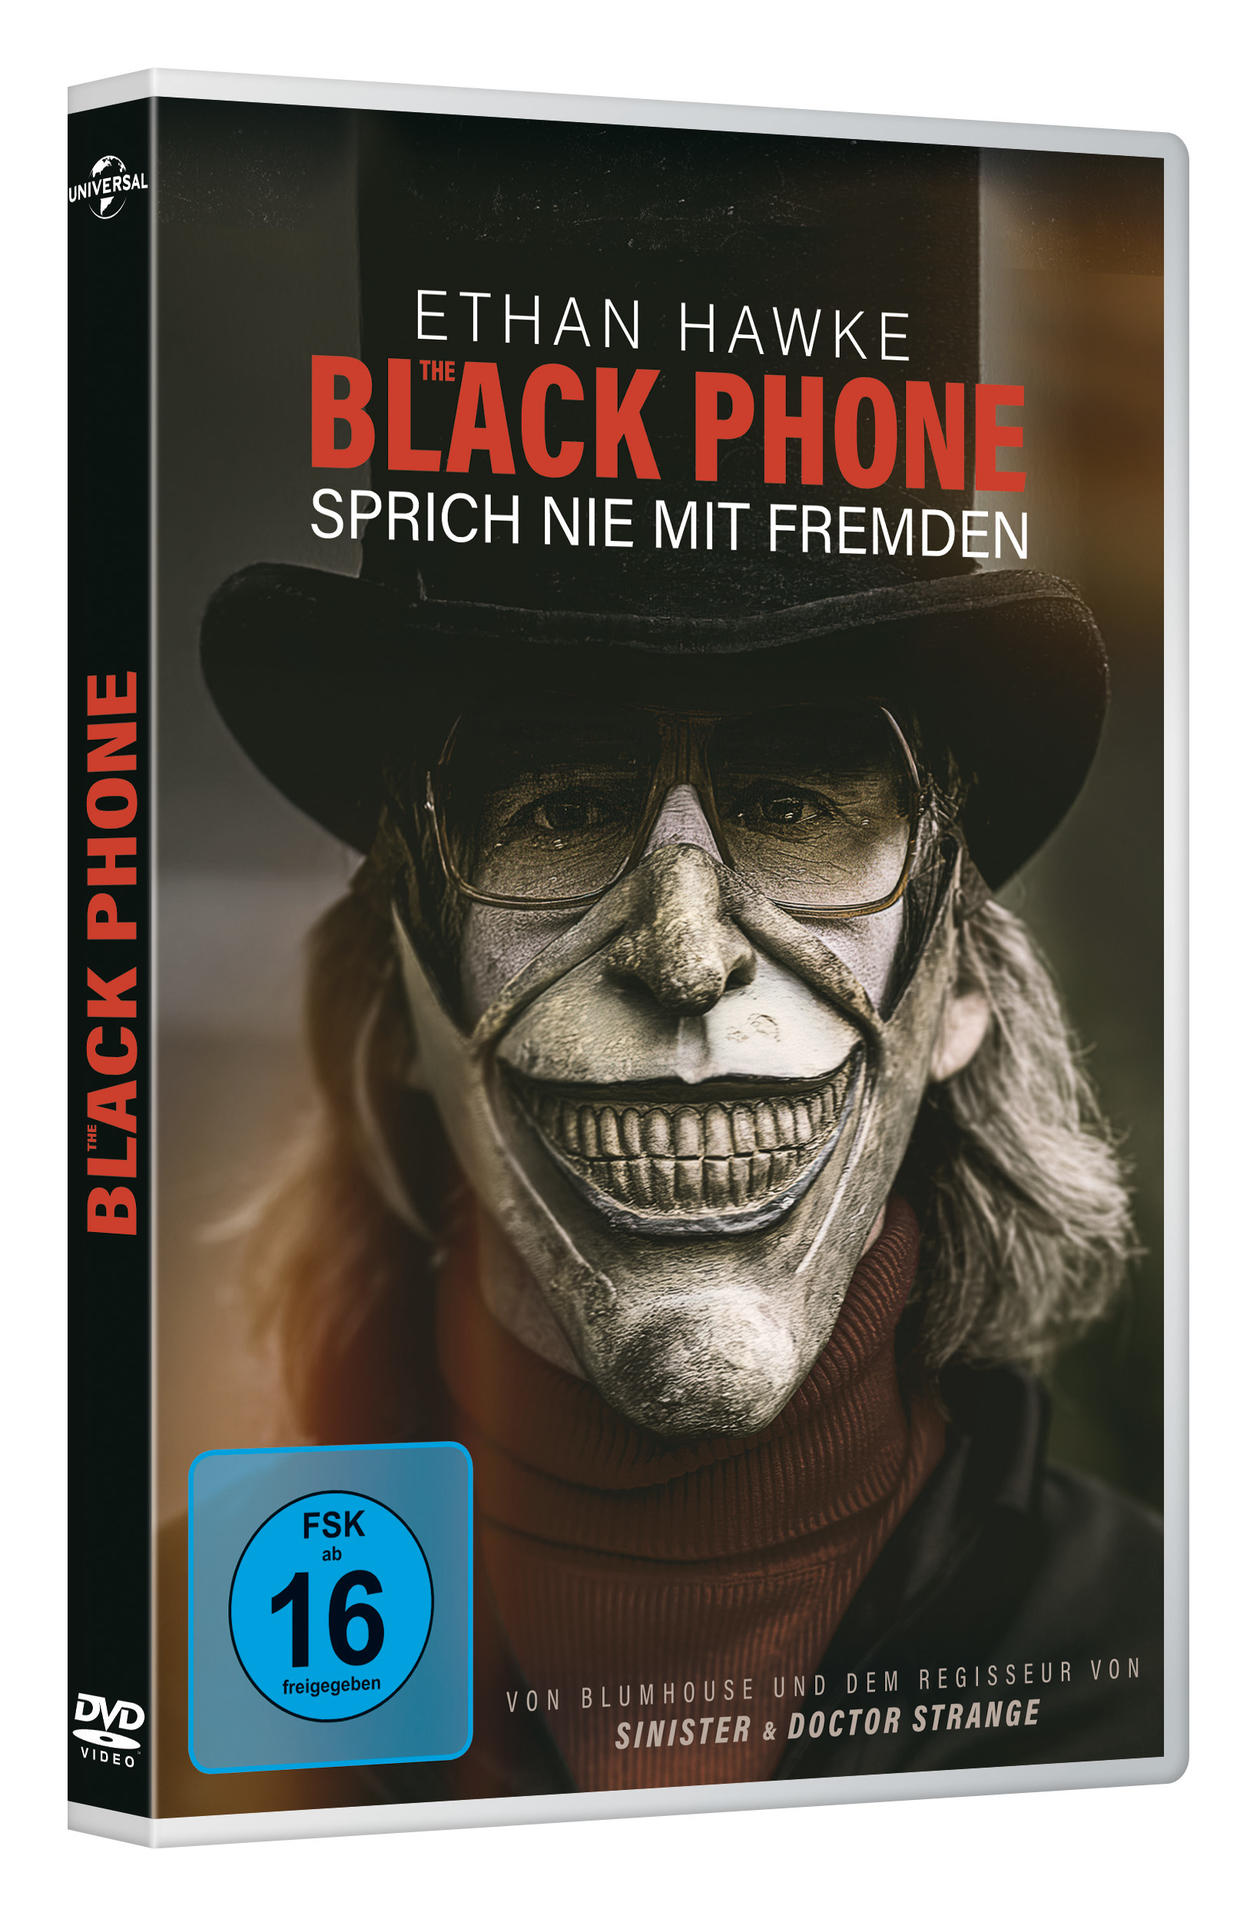 The Black Phone DVD